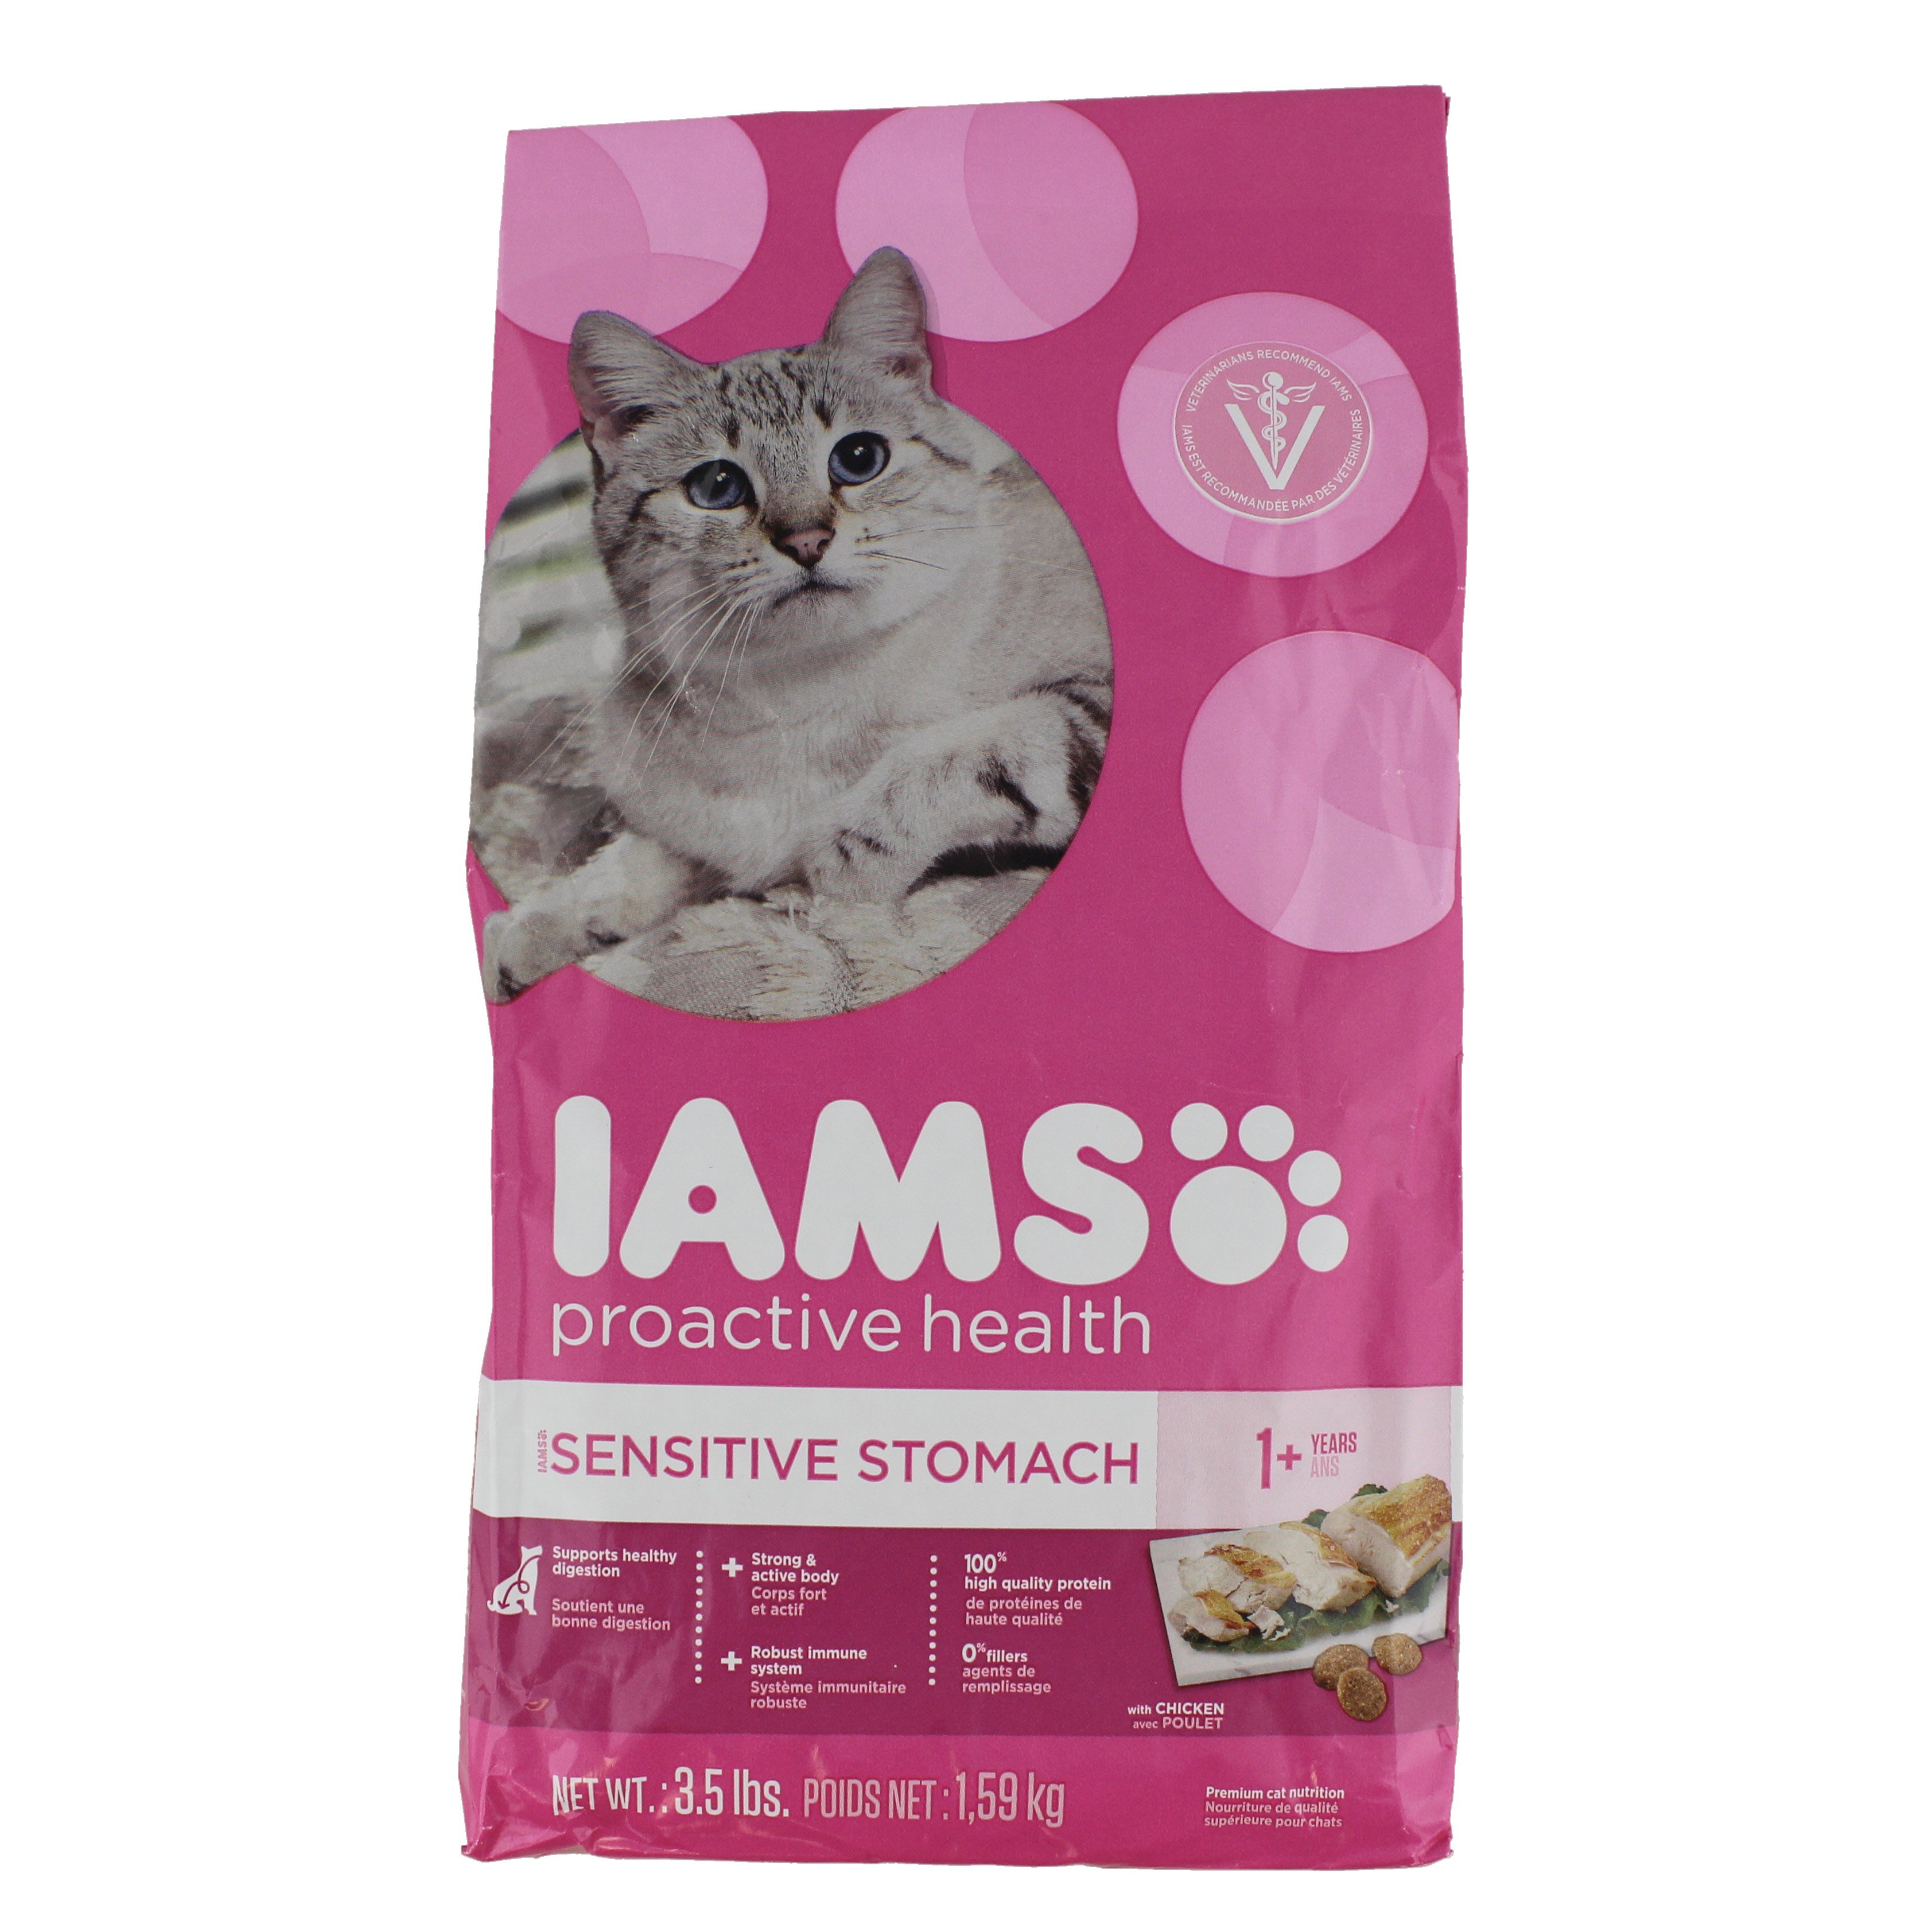 Iams ProActive Health Sensitive Stomach Cat Food Shop Cats at HEB